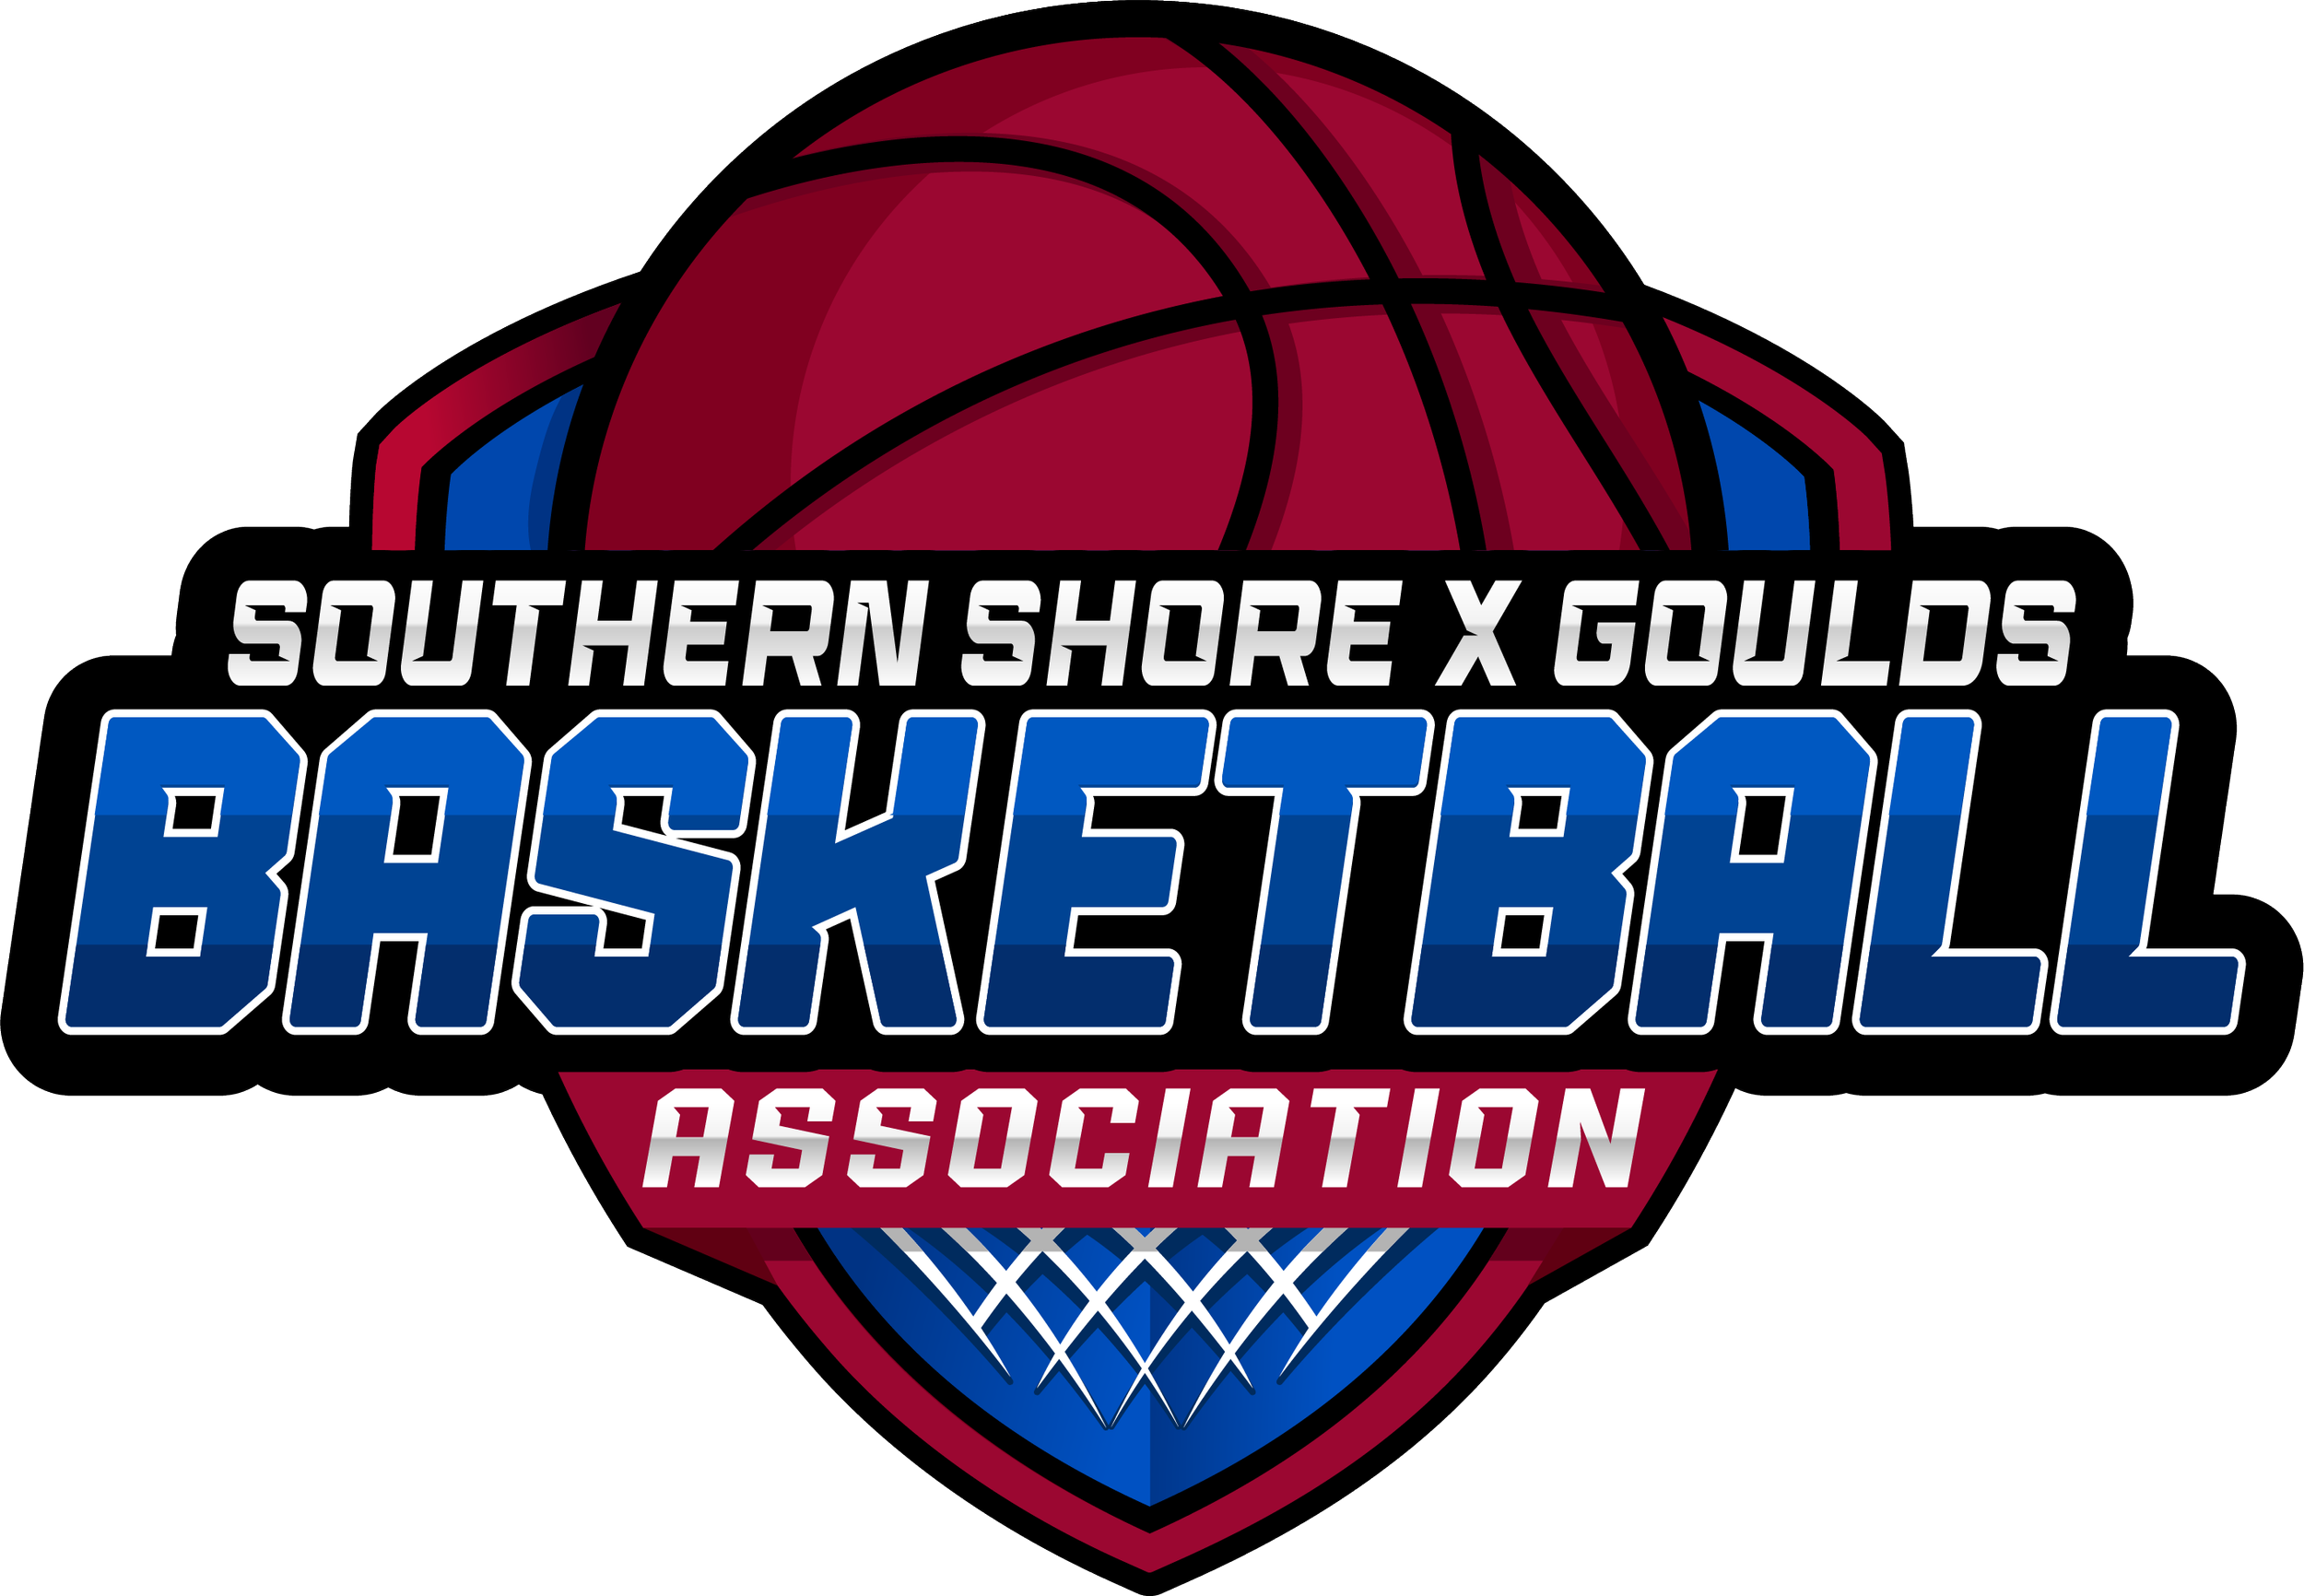 Southern Shore x Goulds Basketball Association